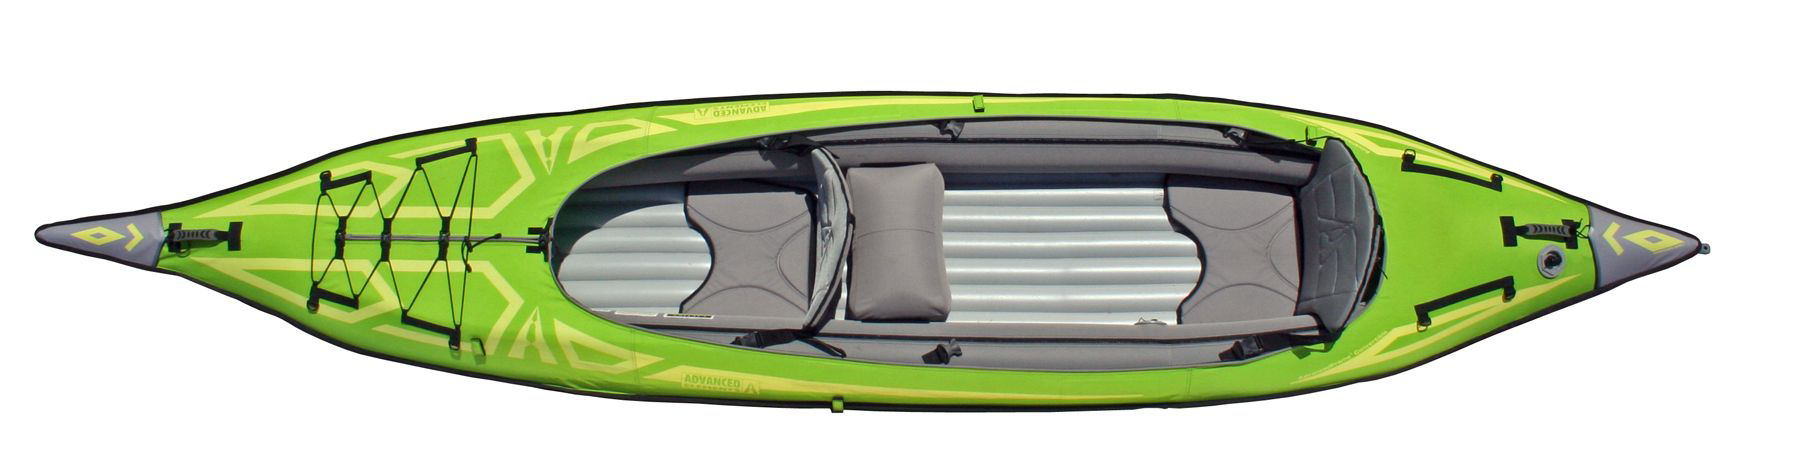 Advanced Elements AdvancedFrame Convertible Inflatable Kayak in Green